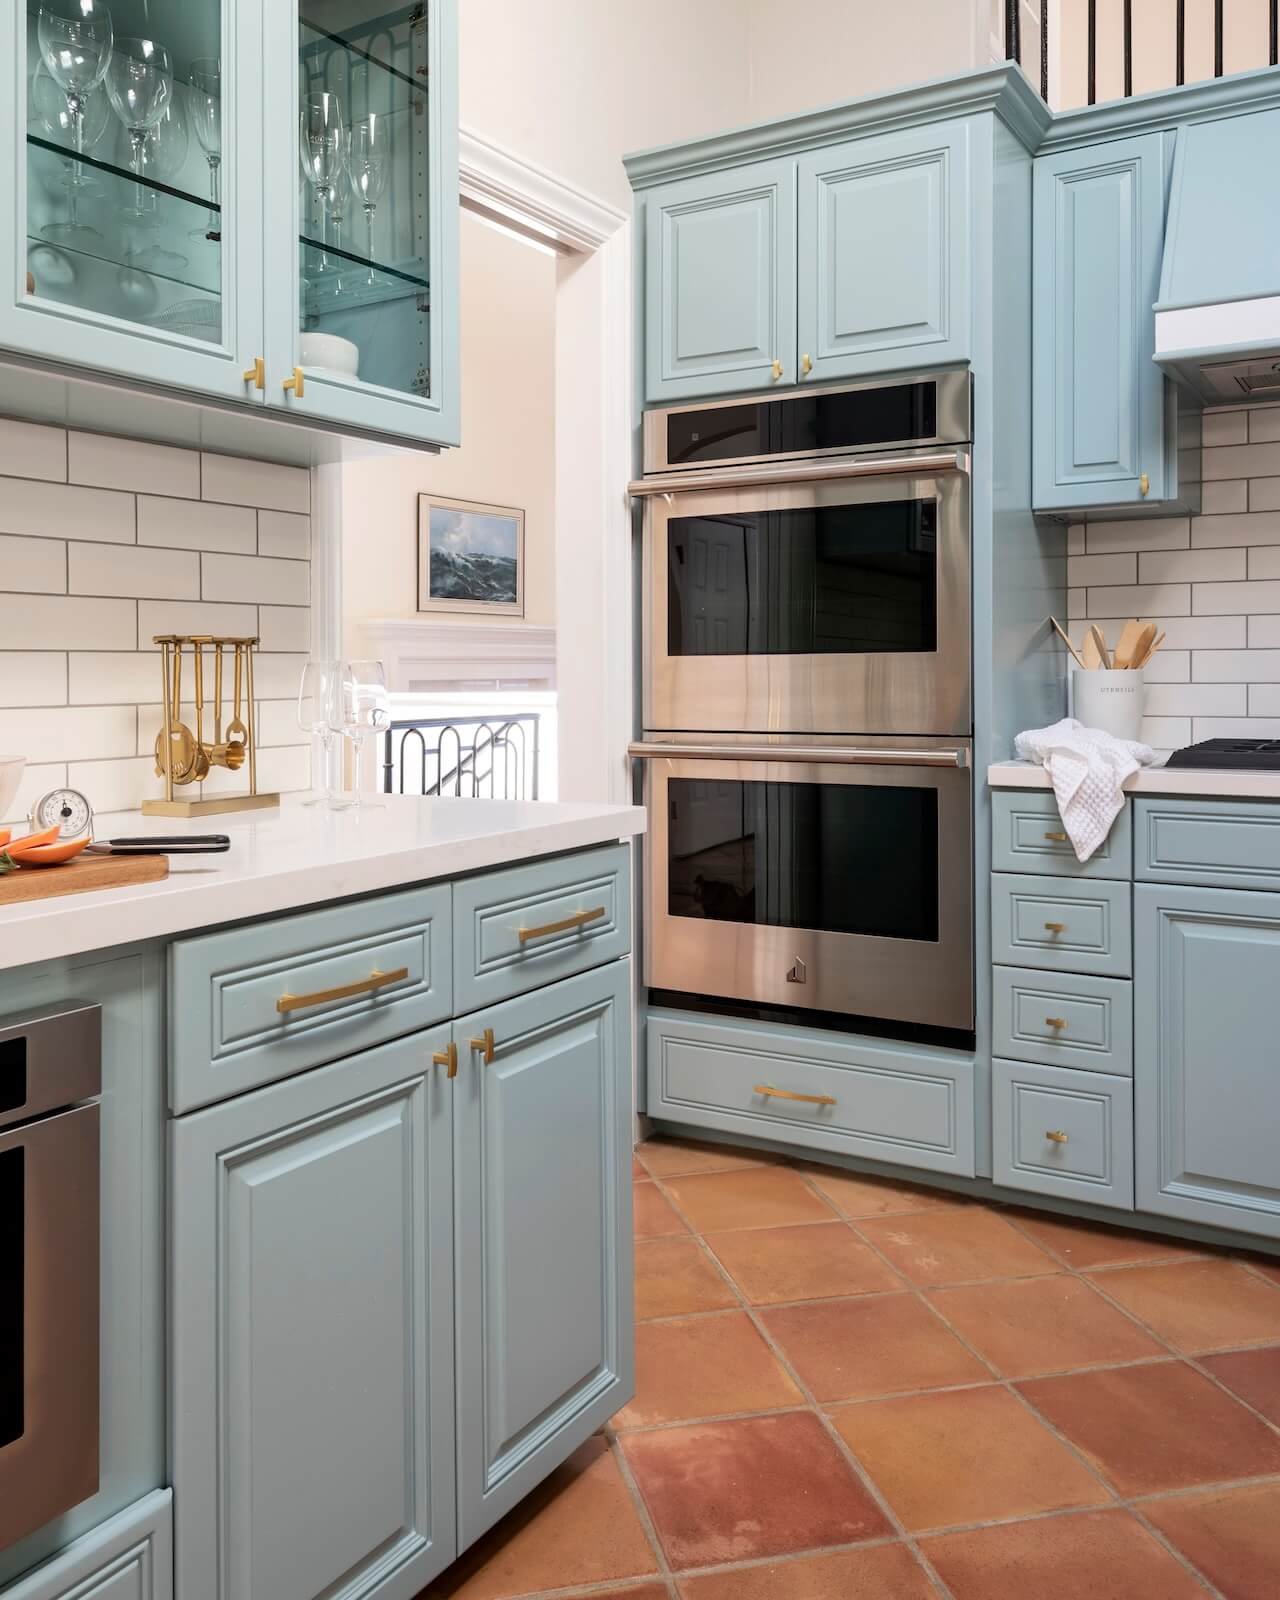 Windward Berkeley Kitchen Built-In Oven + Teal Cabinetry.jpg